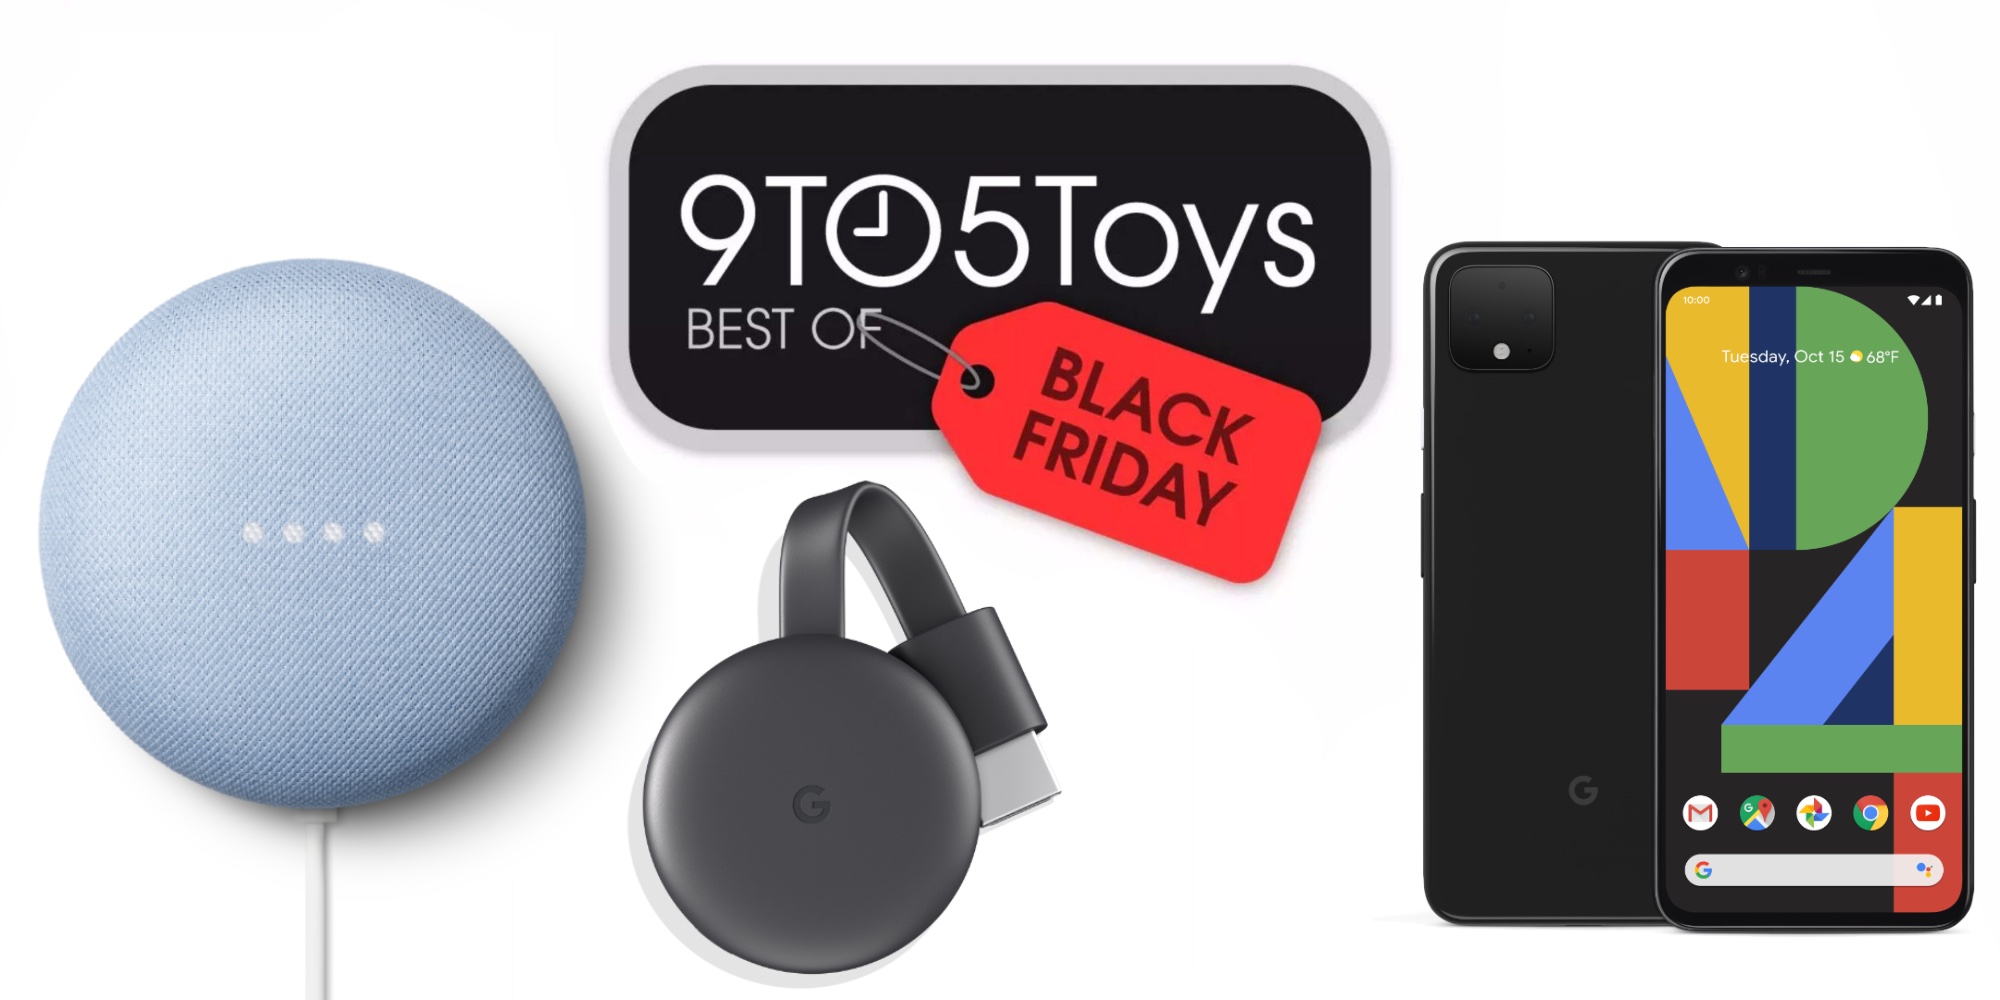 Best Google Black Friday deals: Home Mini, Chromecast, more - 9to5Toys